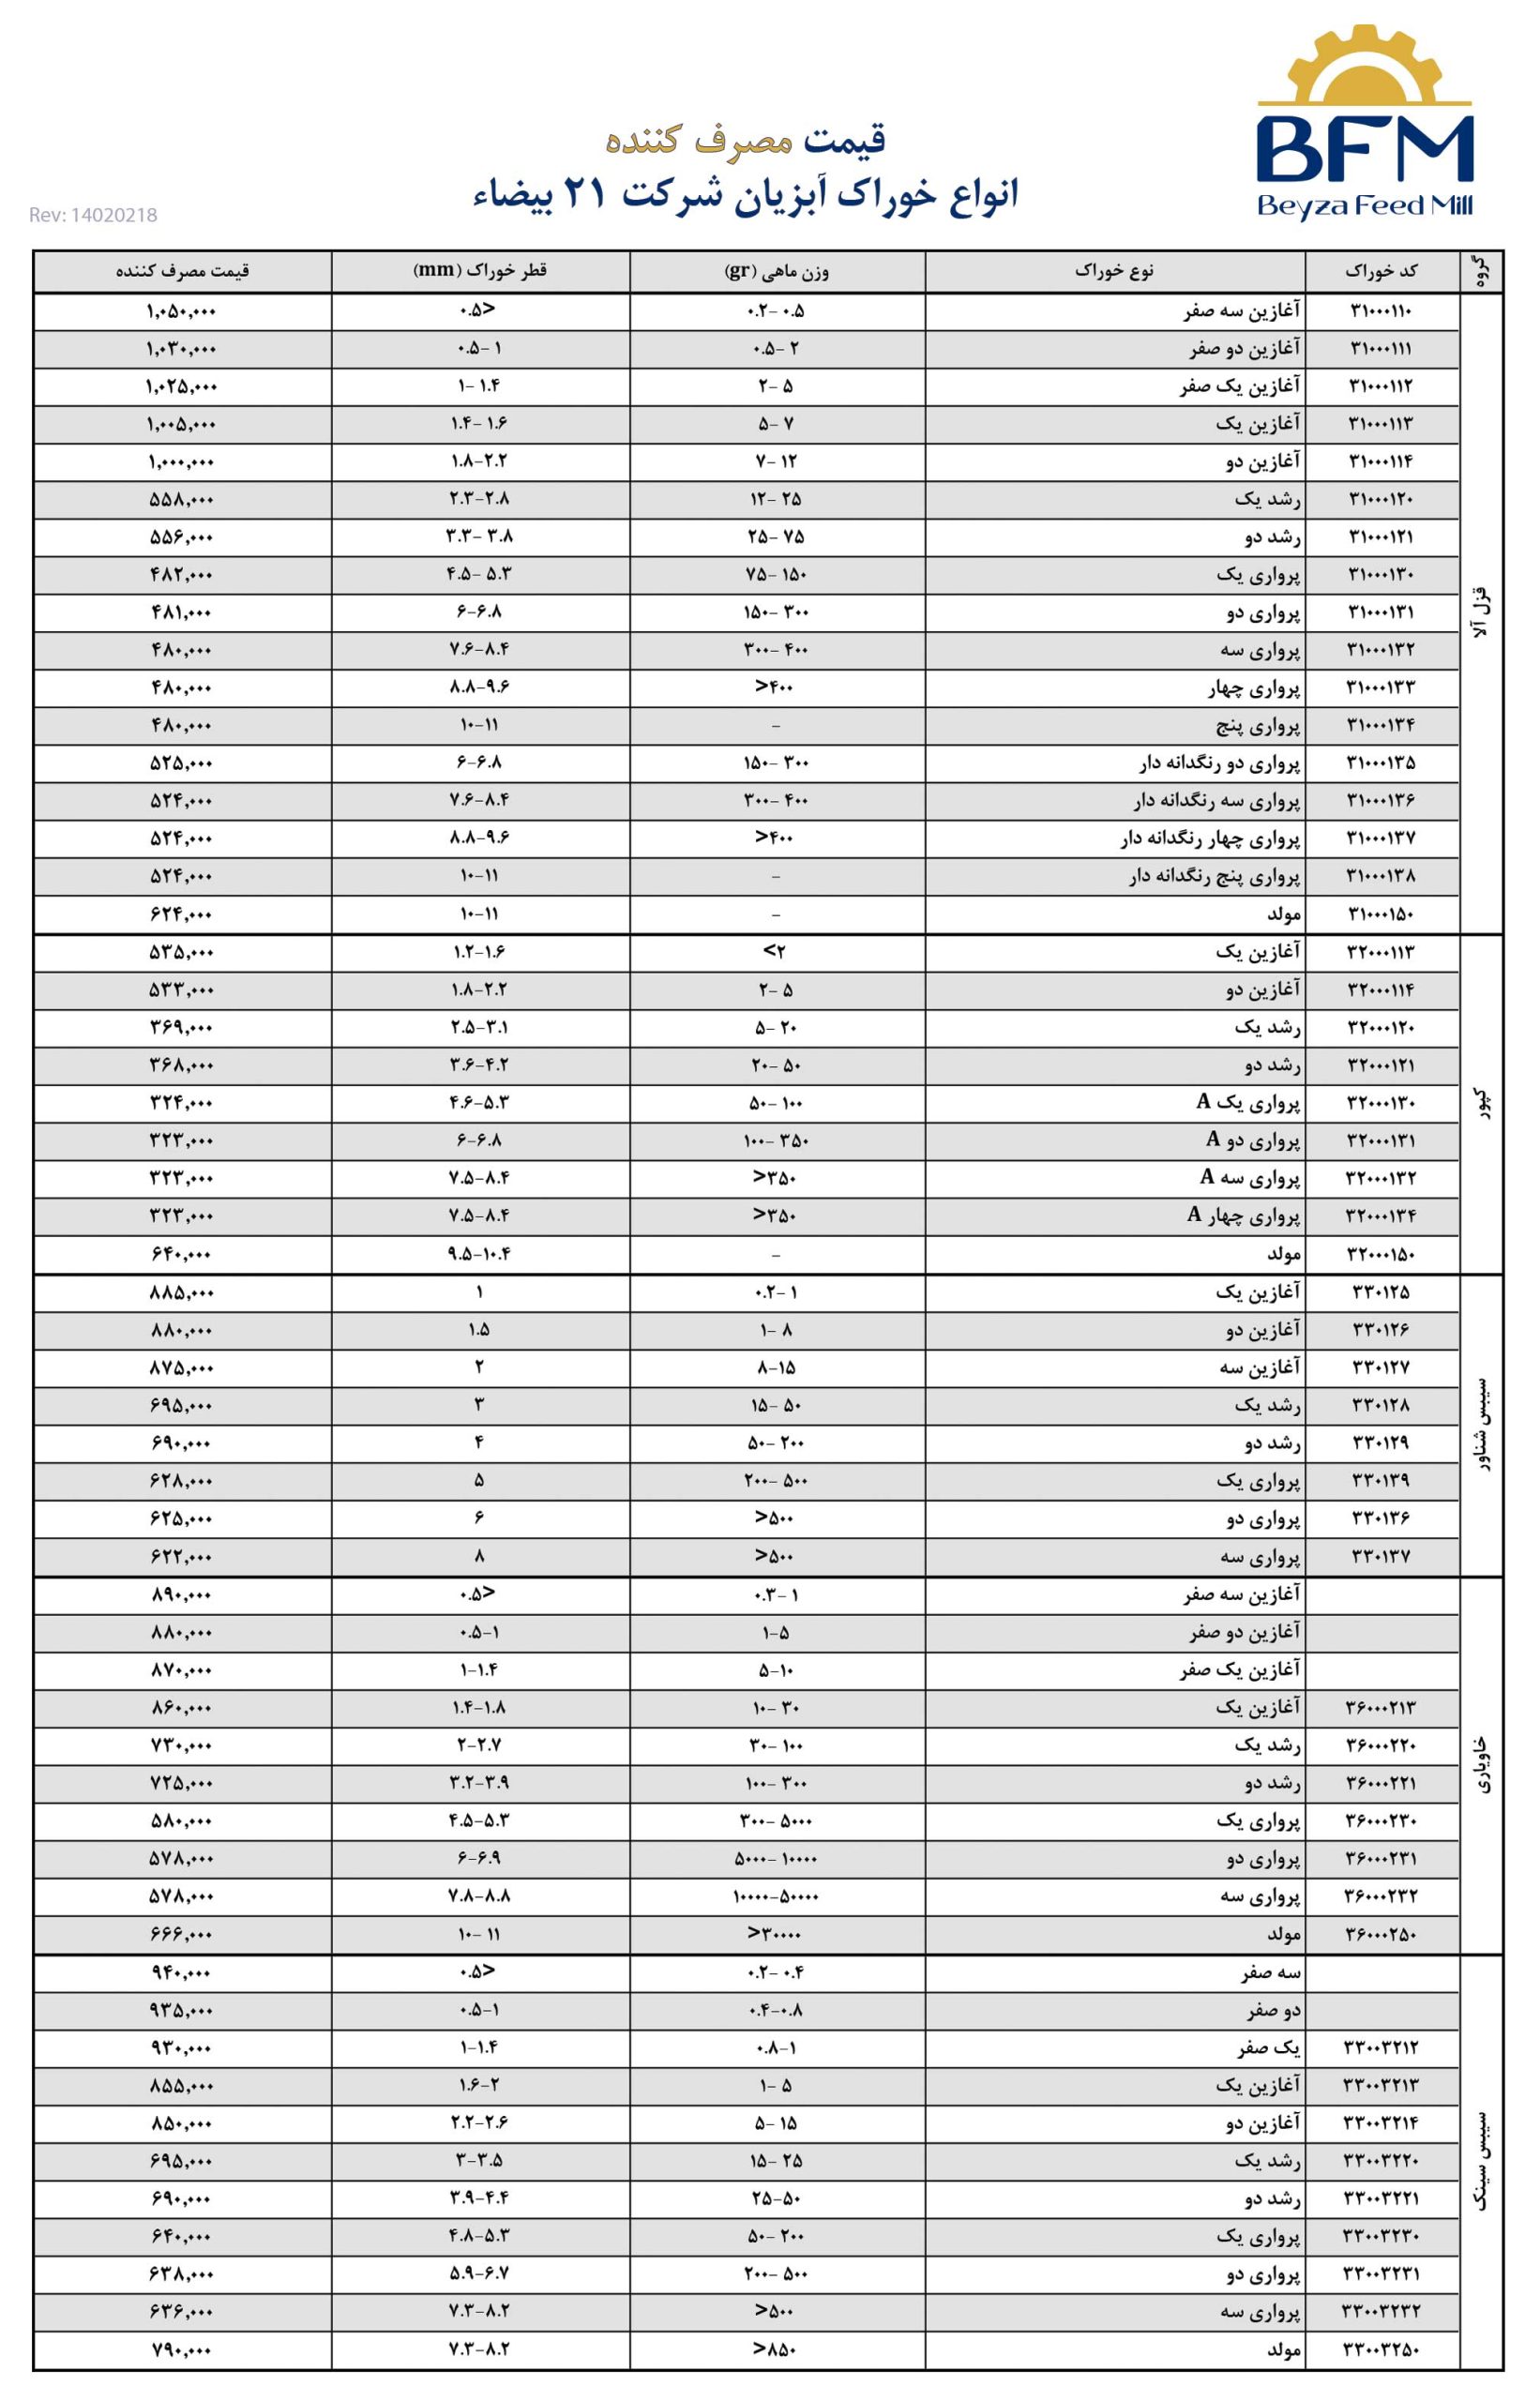 Price List BFM LetterHead A4 14020218 Rev 01 scaled - لیست قیمت محصولات شرکت تولیدی 21 بیضا